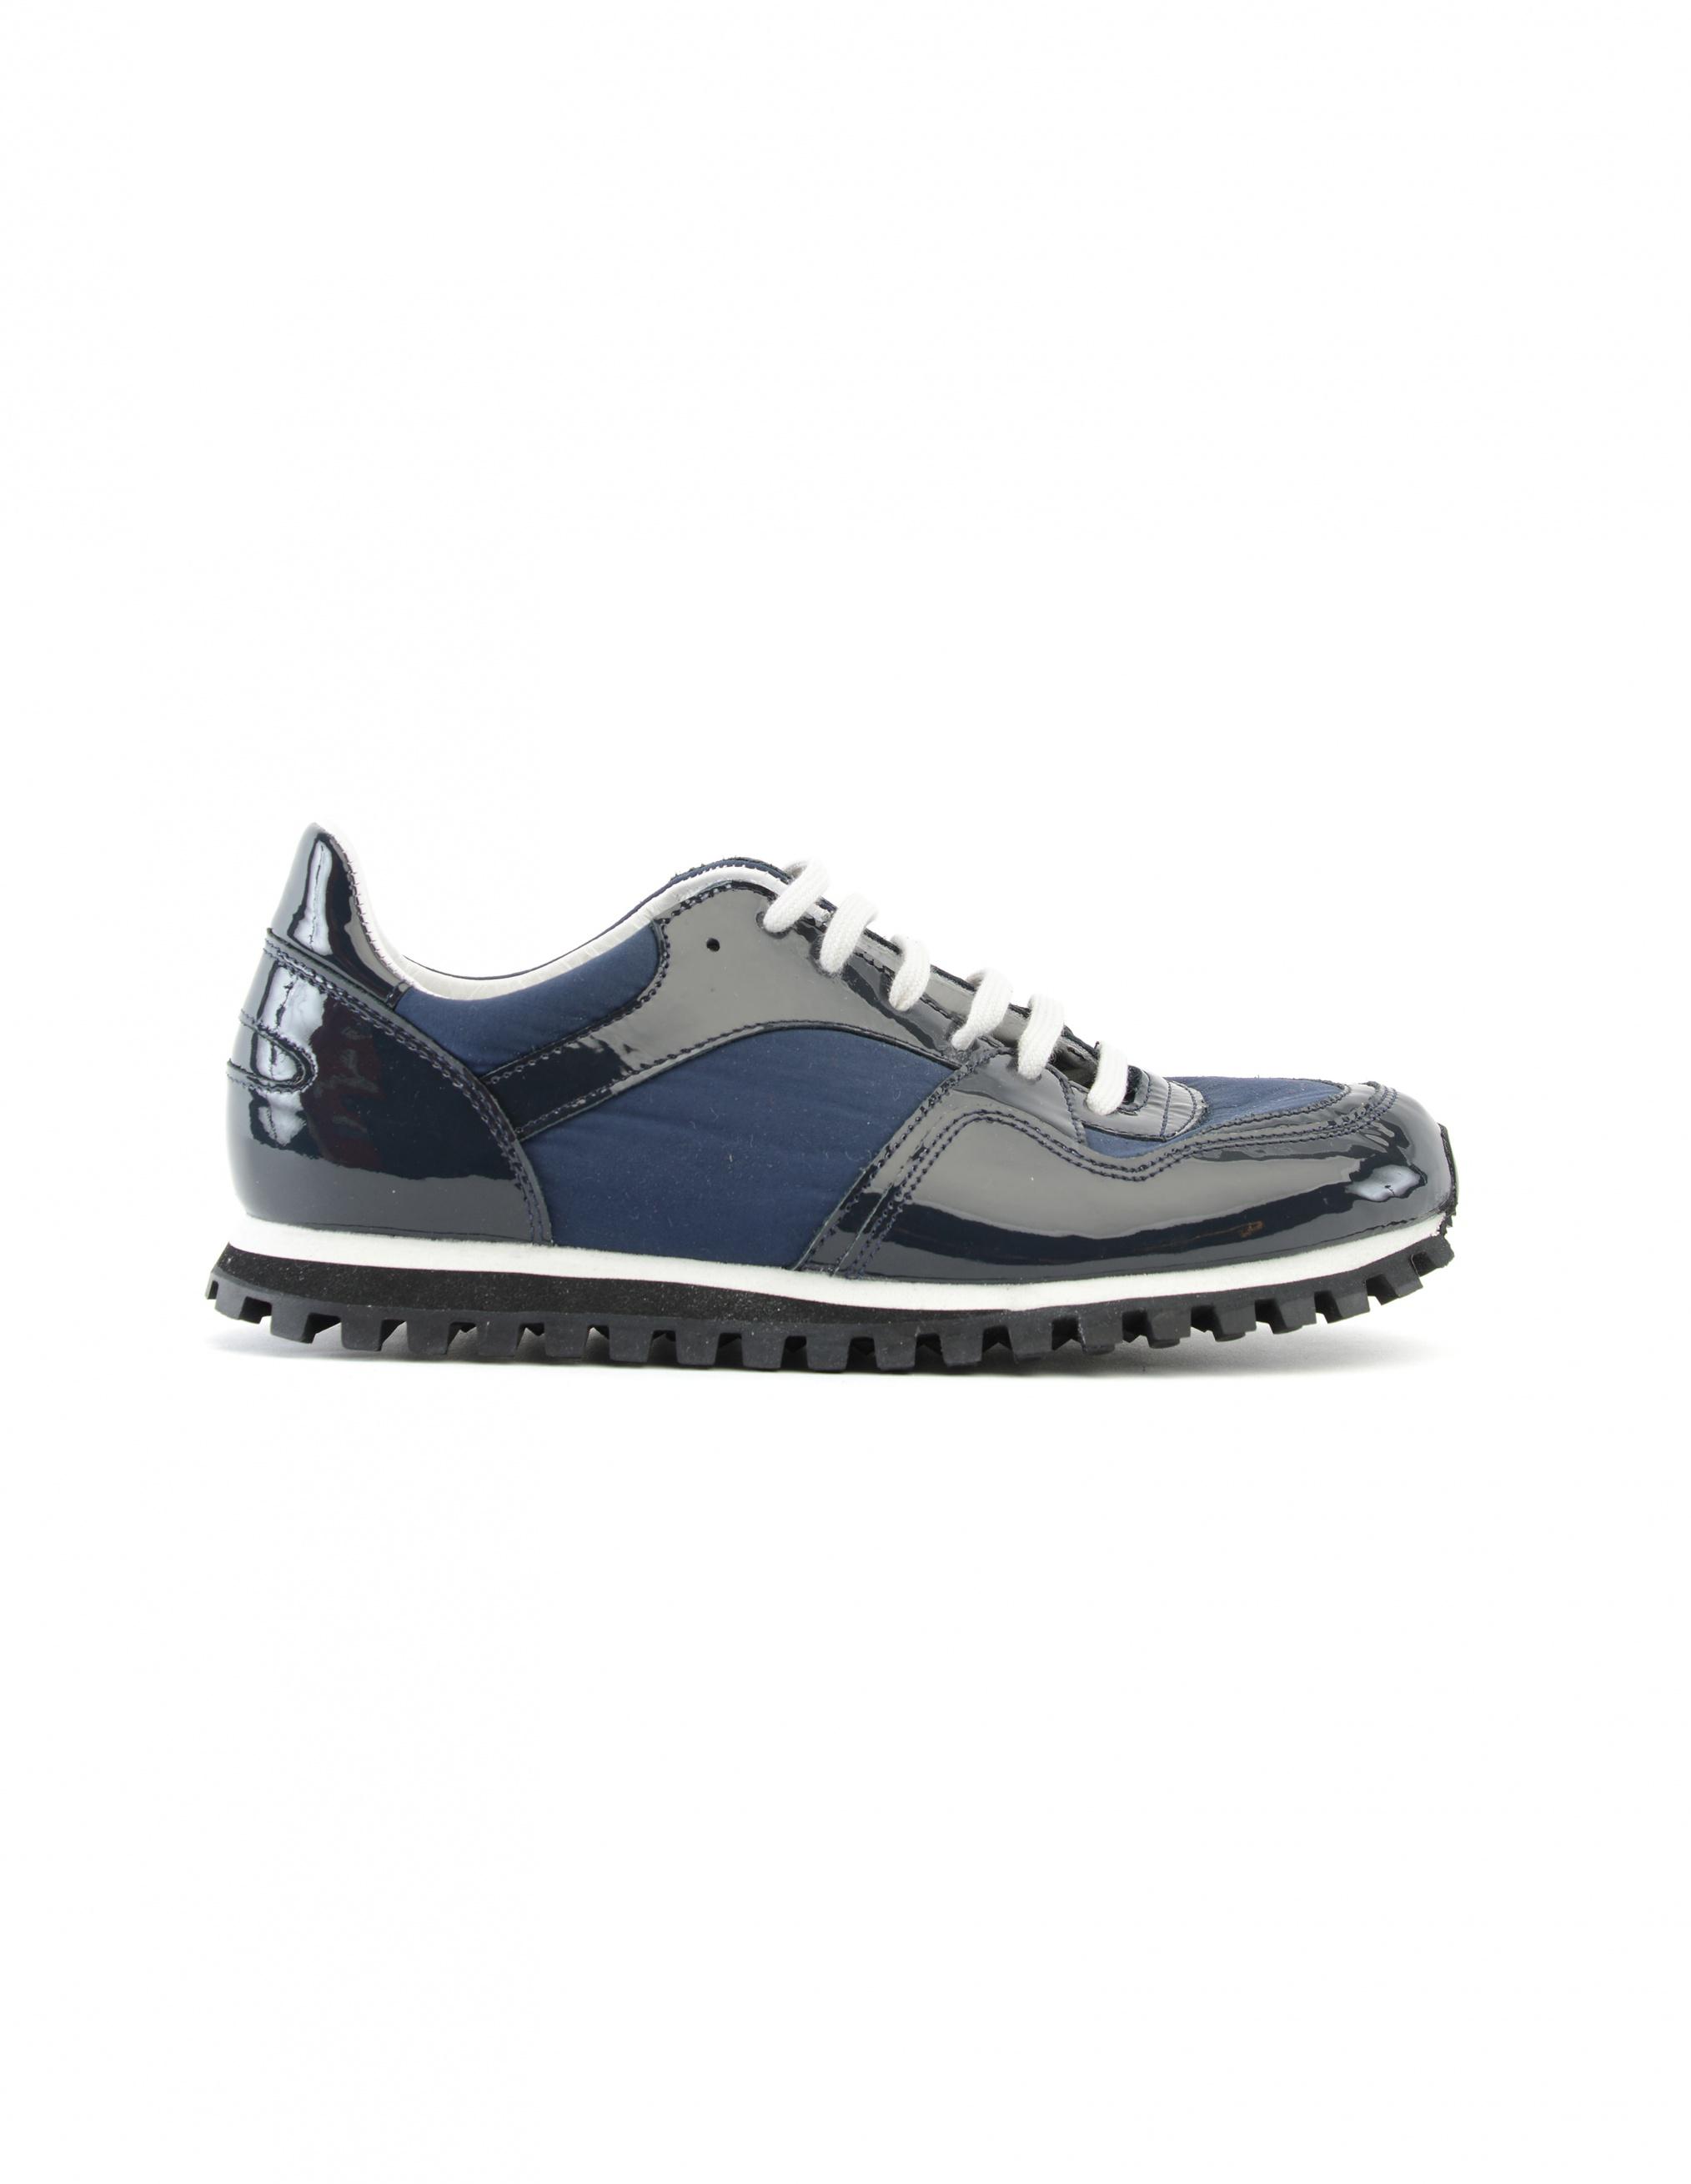 Lyst - Comme Des Garçons Cdg X Spalwart Sneakers in Blue